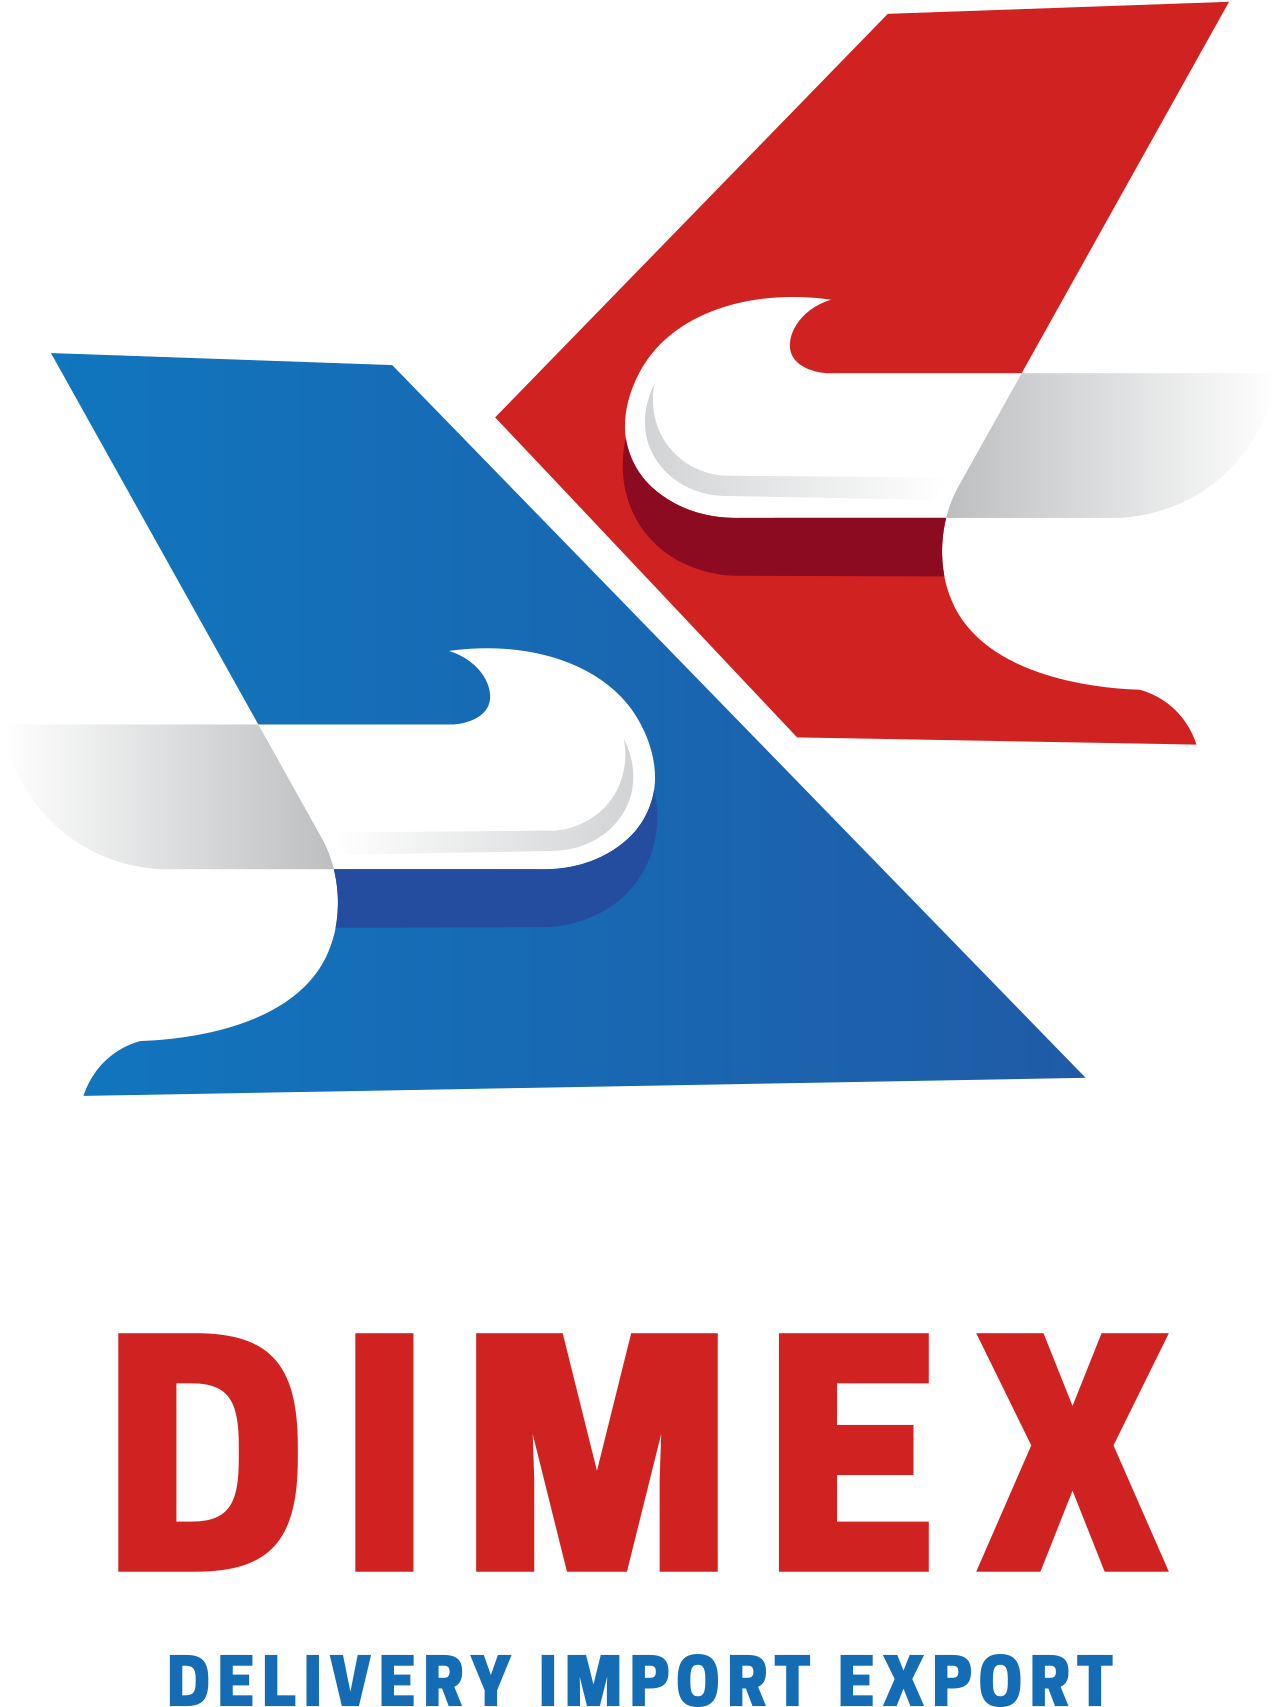 DIMEX's web page